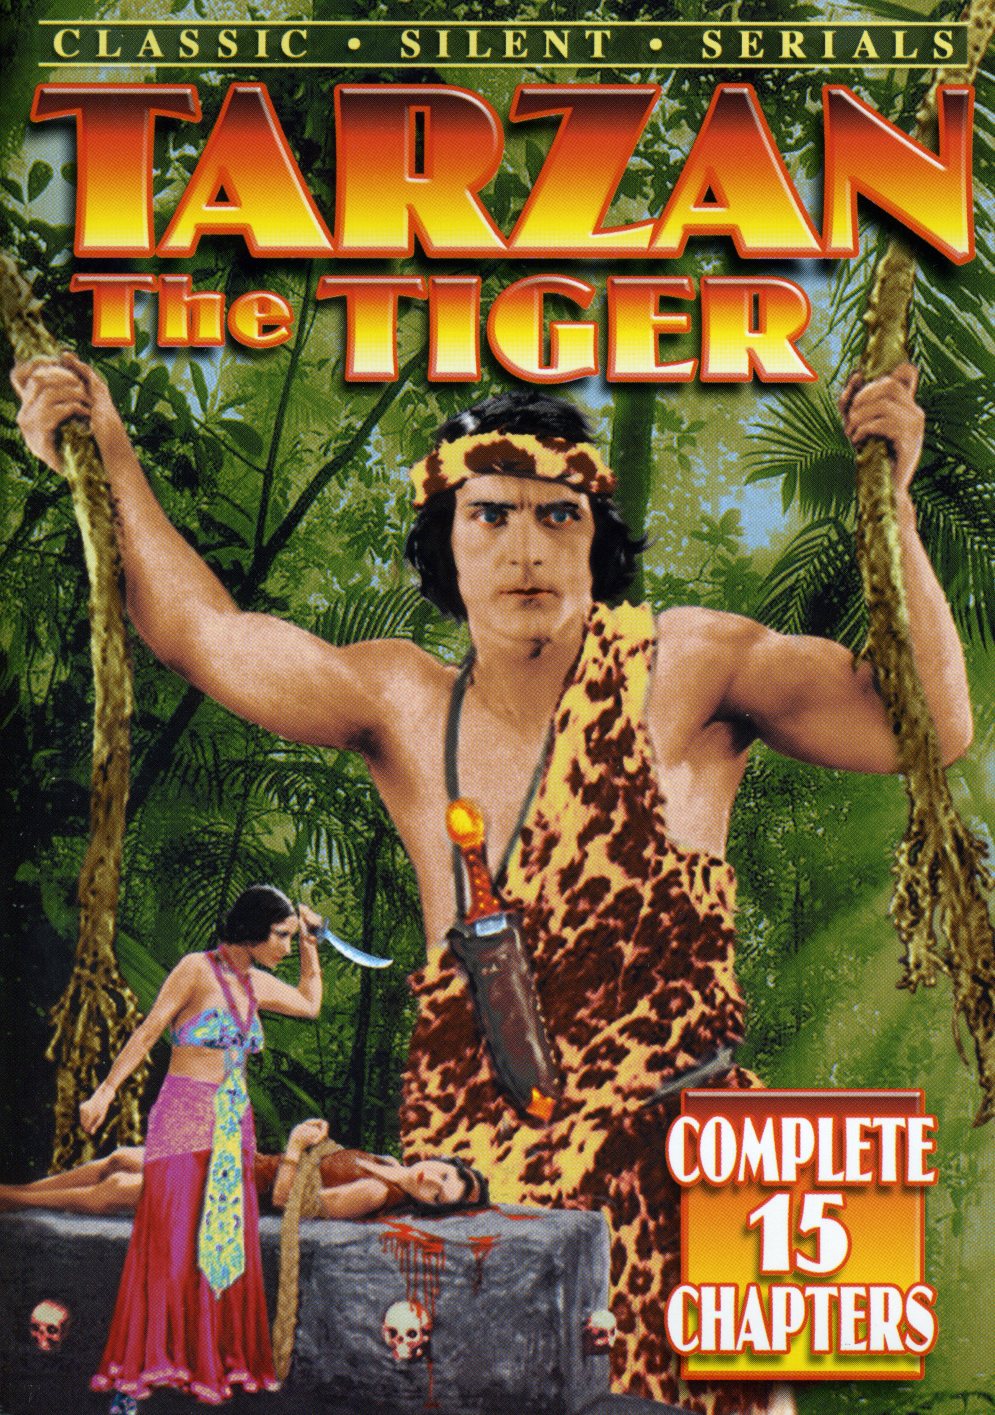 TARZAN THE TIGER (1929) (SILENT) / (B&W)